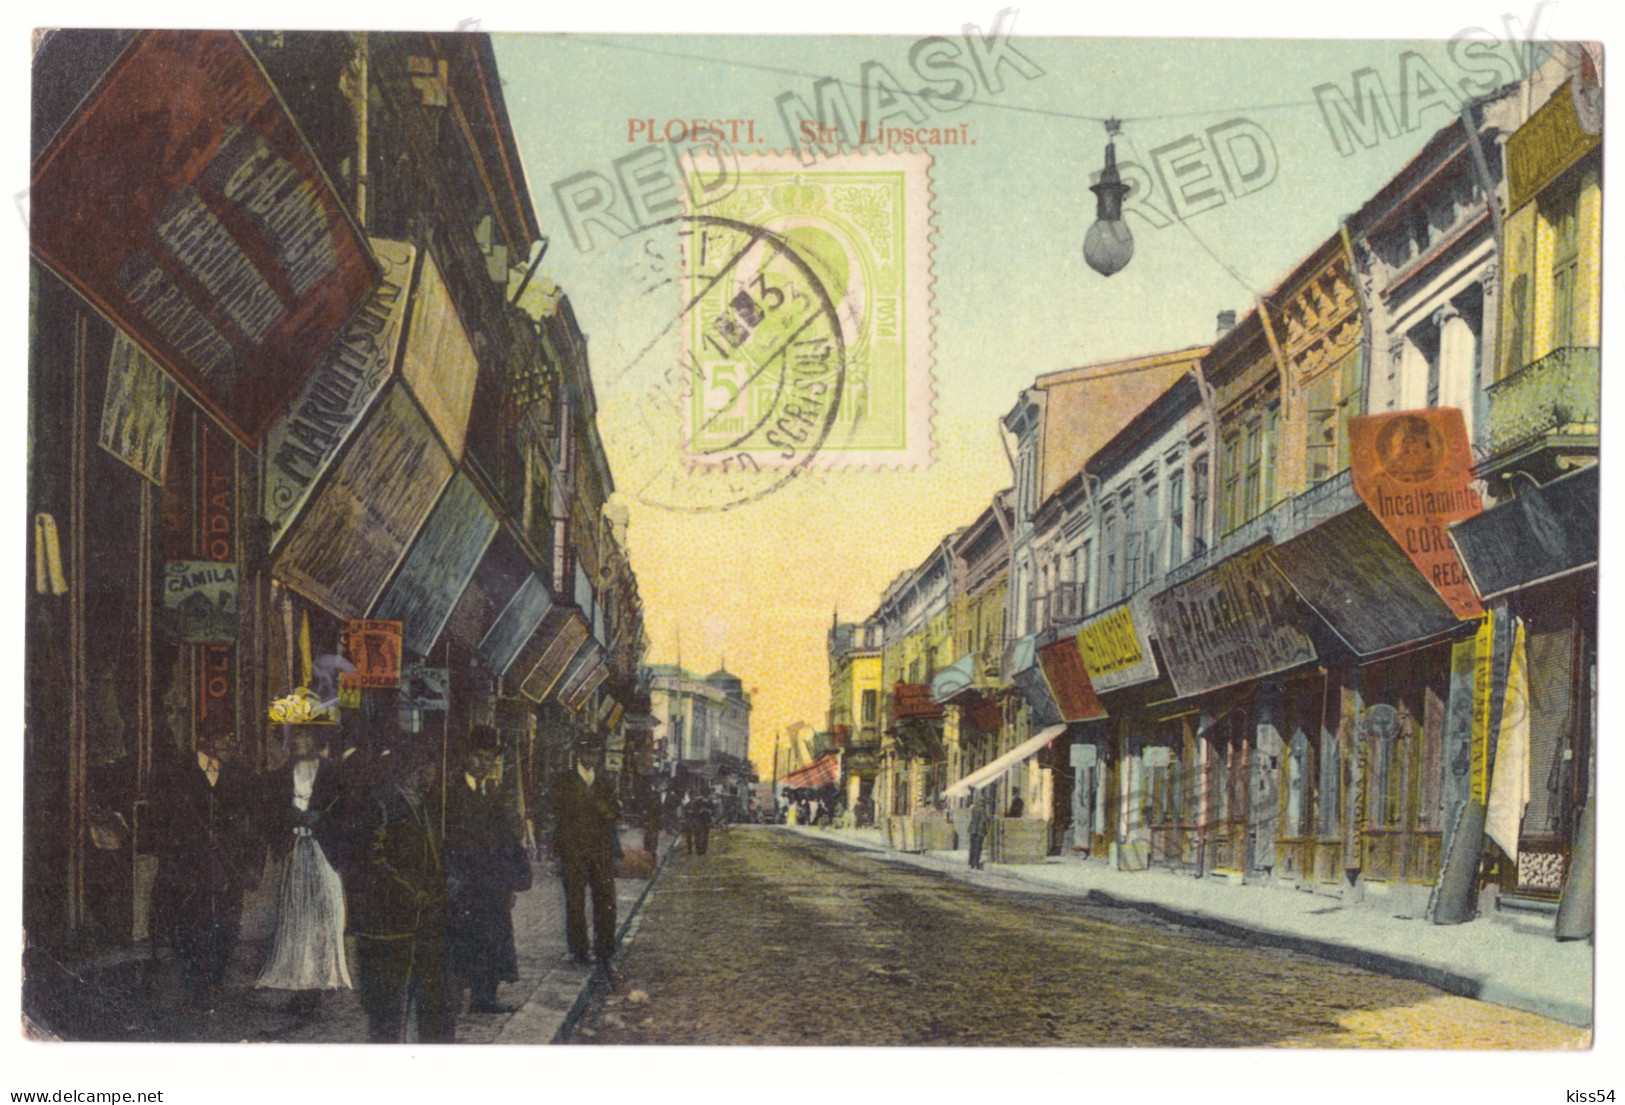 RO 69 - 21056 PLOIESTI, Street Stores, Romania - Old Postcard - Used - TCV - 1923 - Romania